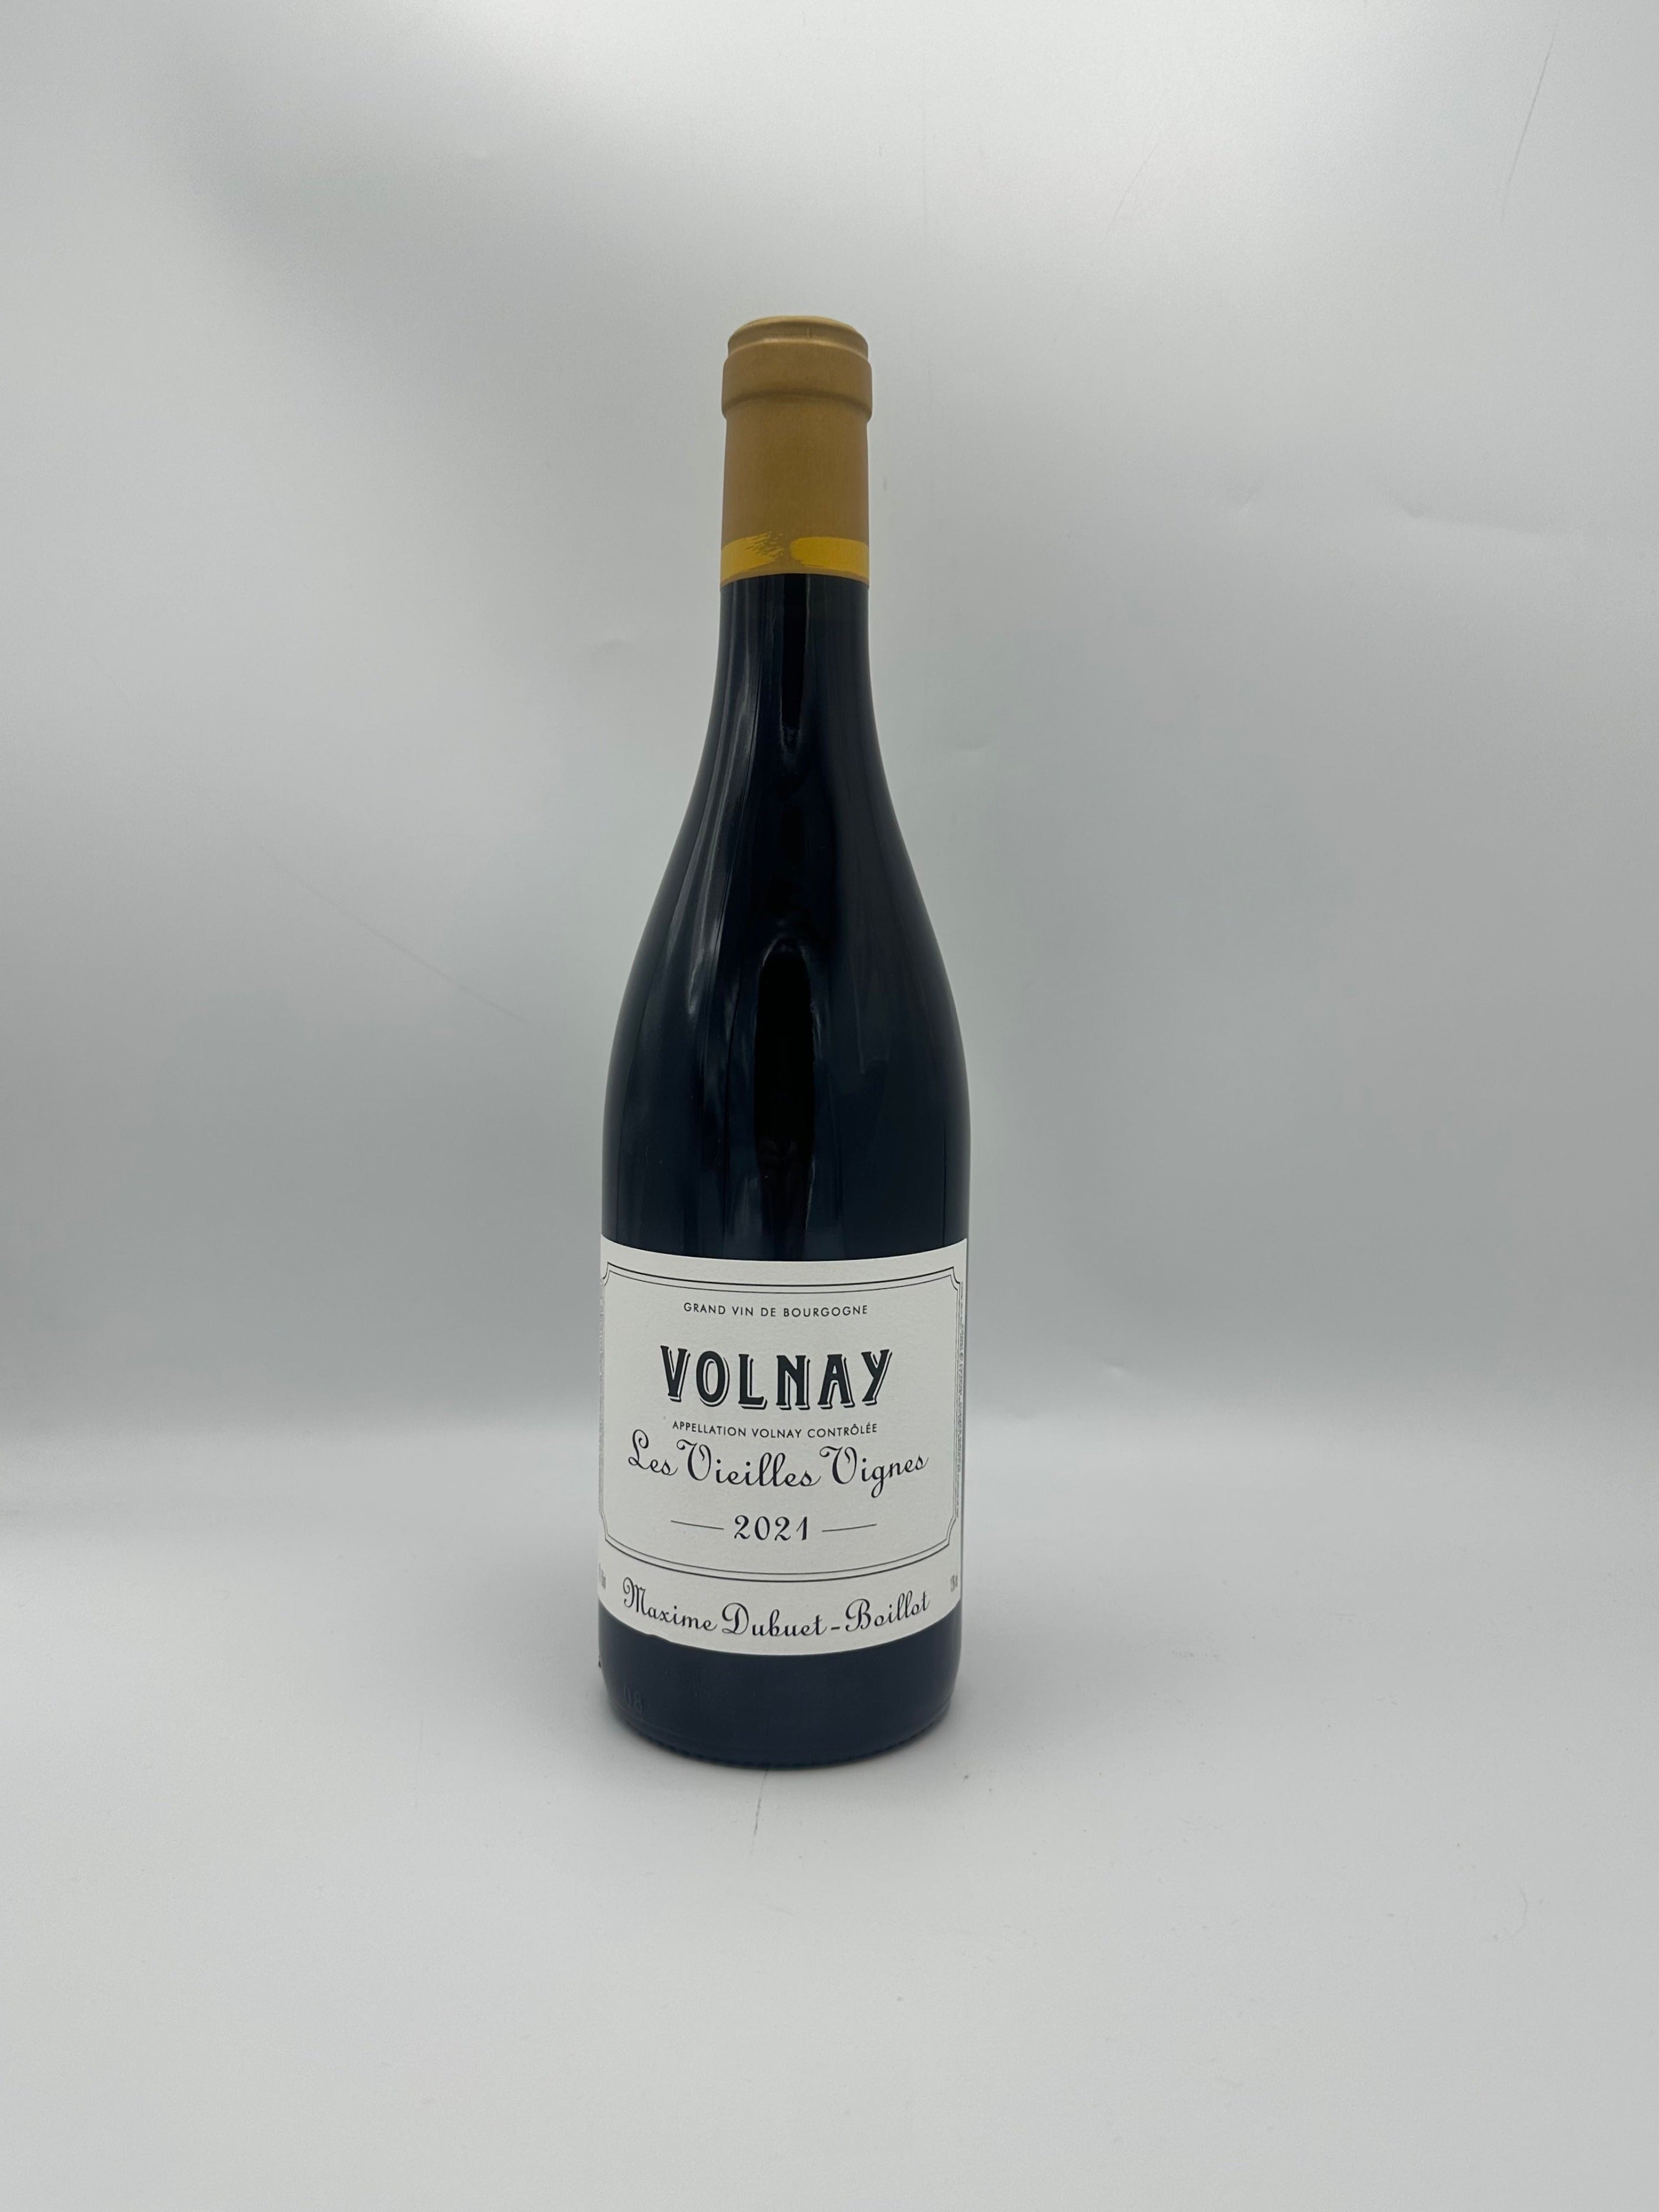 Volnay “Les Vieilles Vignes” 2022 Tinto - Maxime Dubuet Boillot